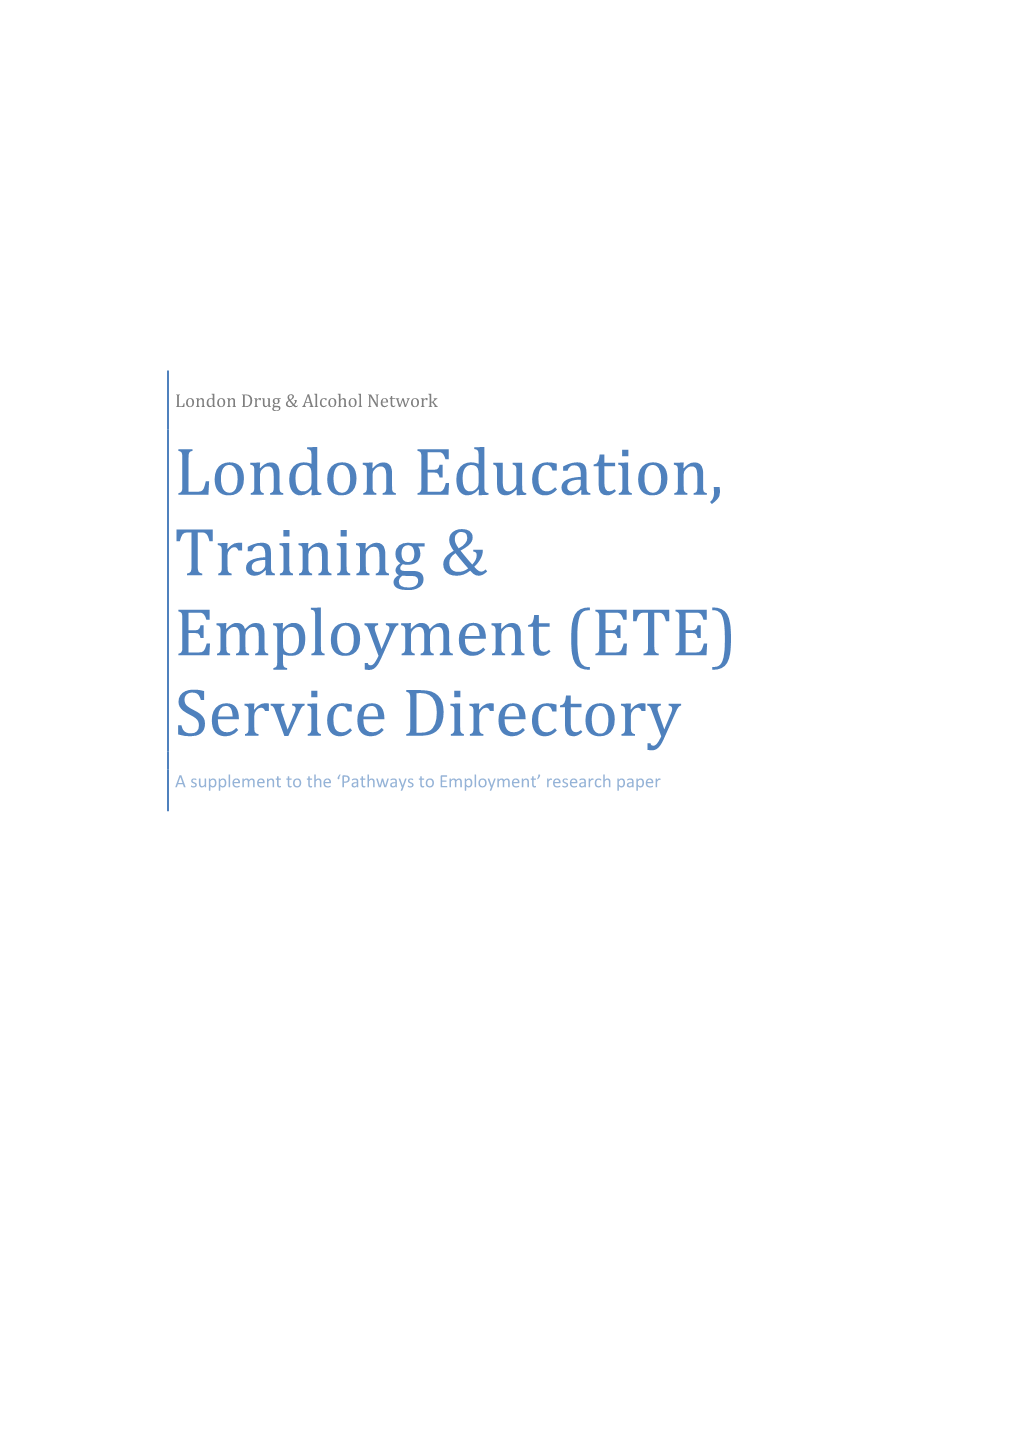 London Education, Training & Employment (ETE) Service Directory